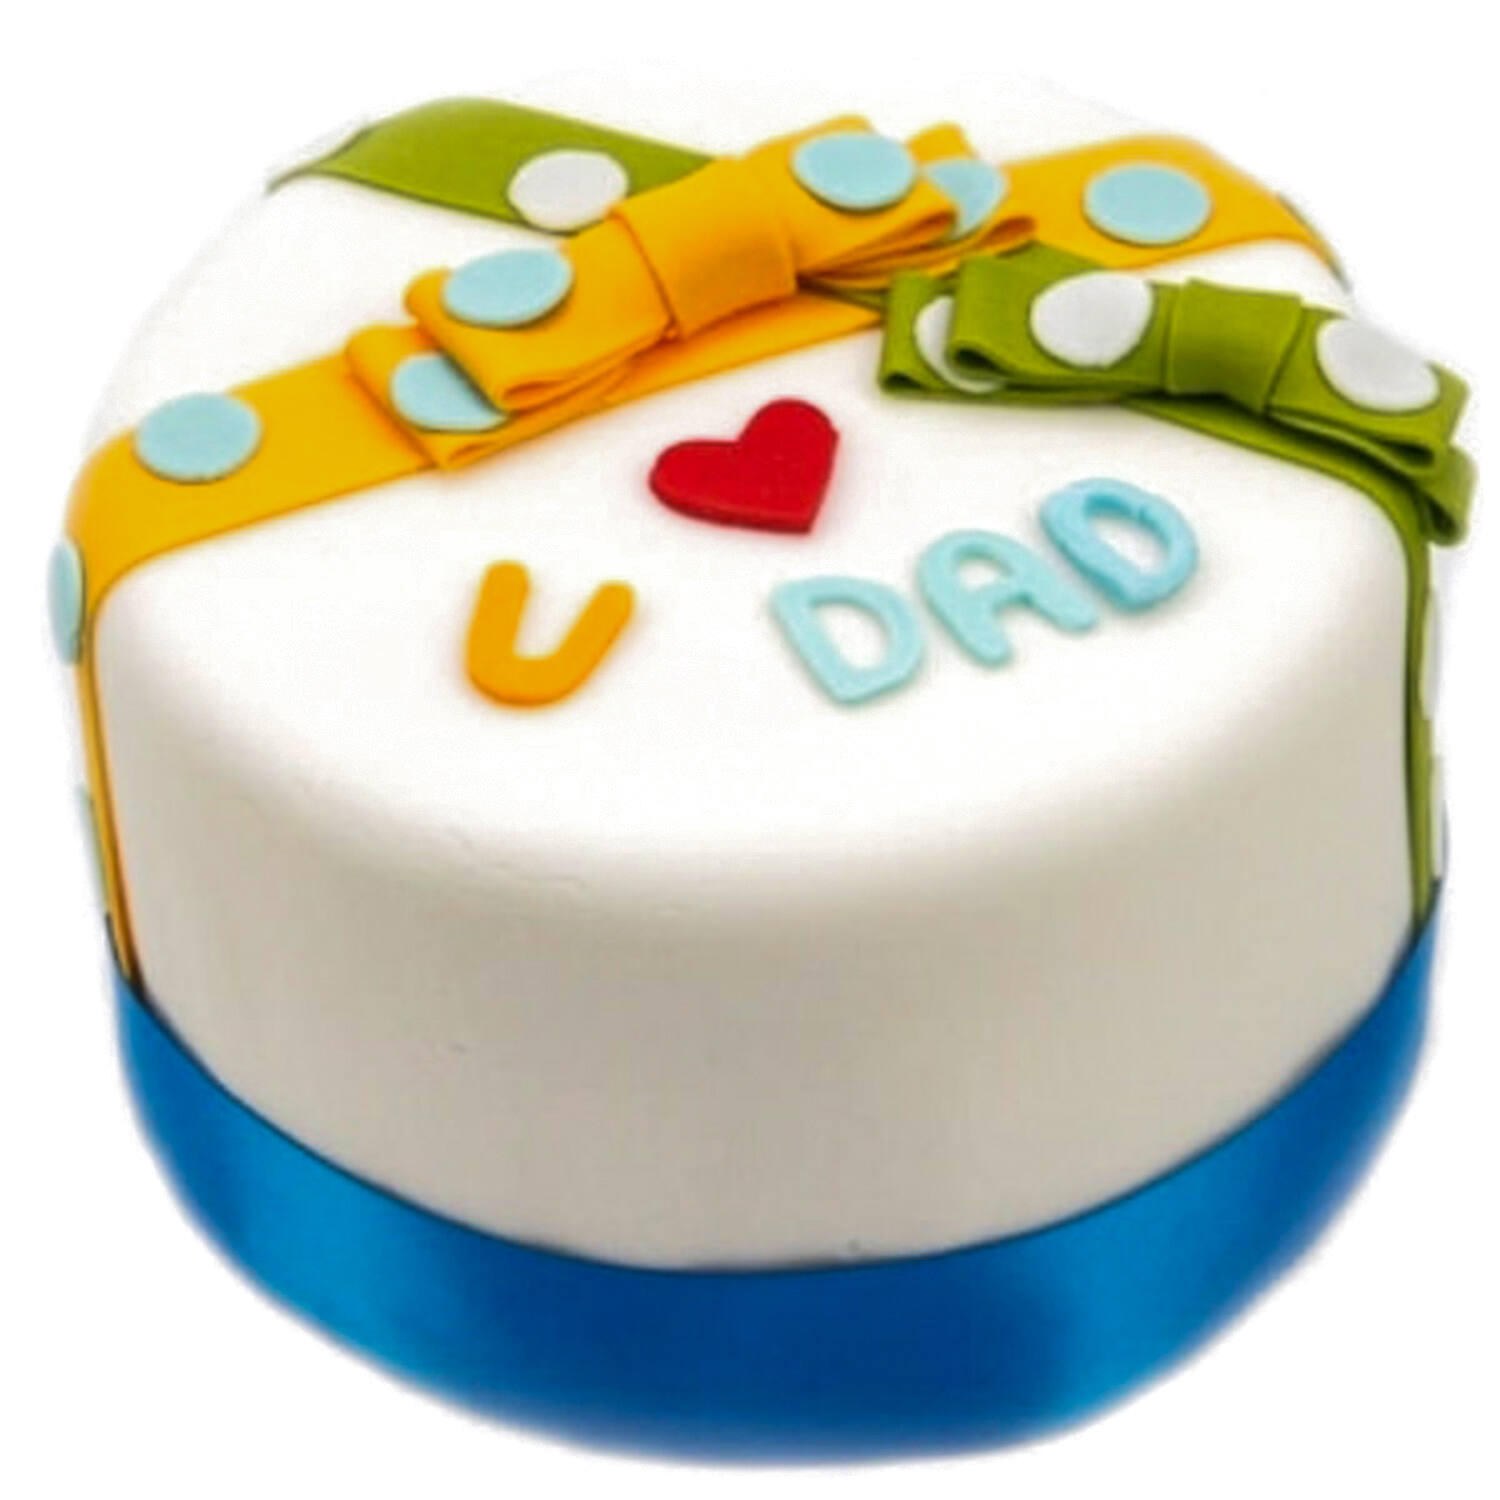 Kiwi Melonge Cake | Buy, Order or Send Cake Online | Winni.in | Winni.in